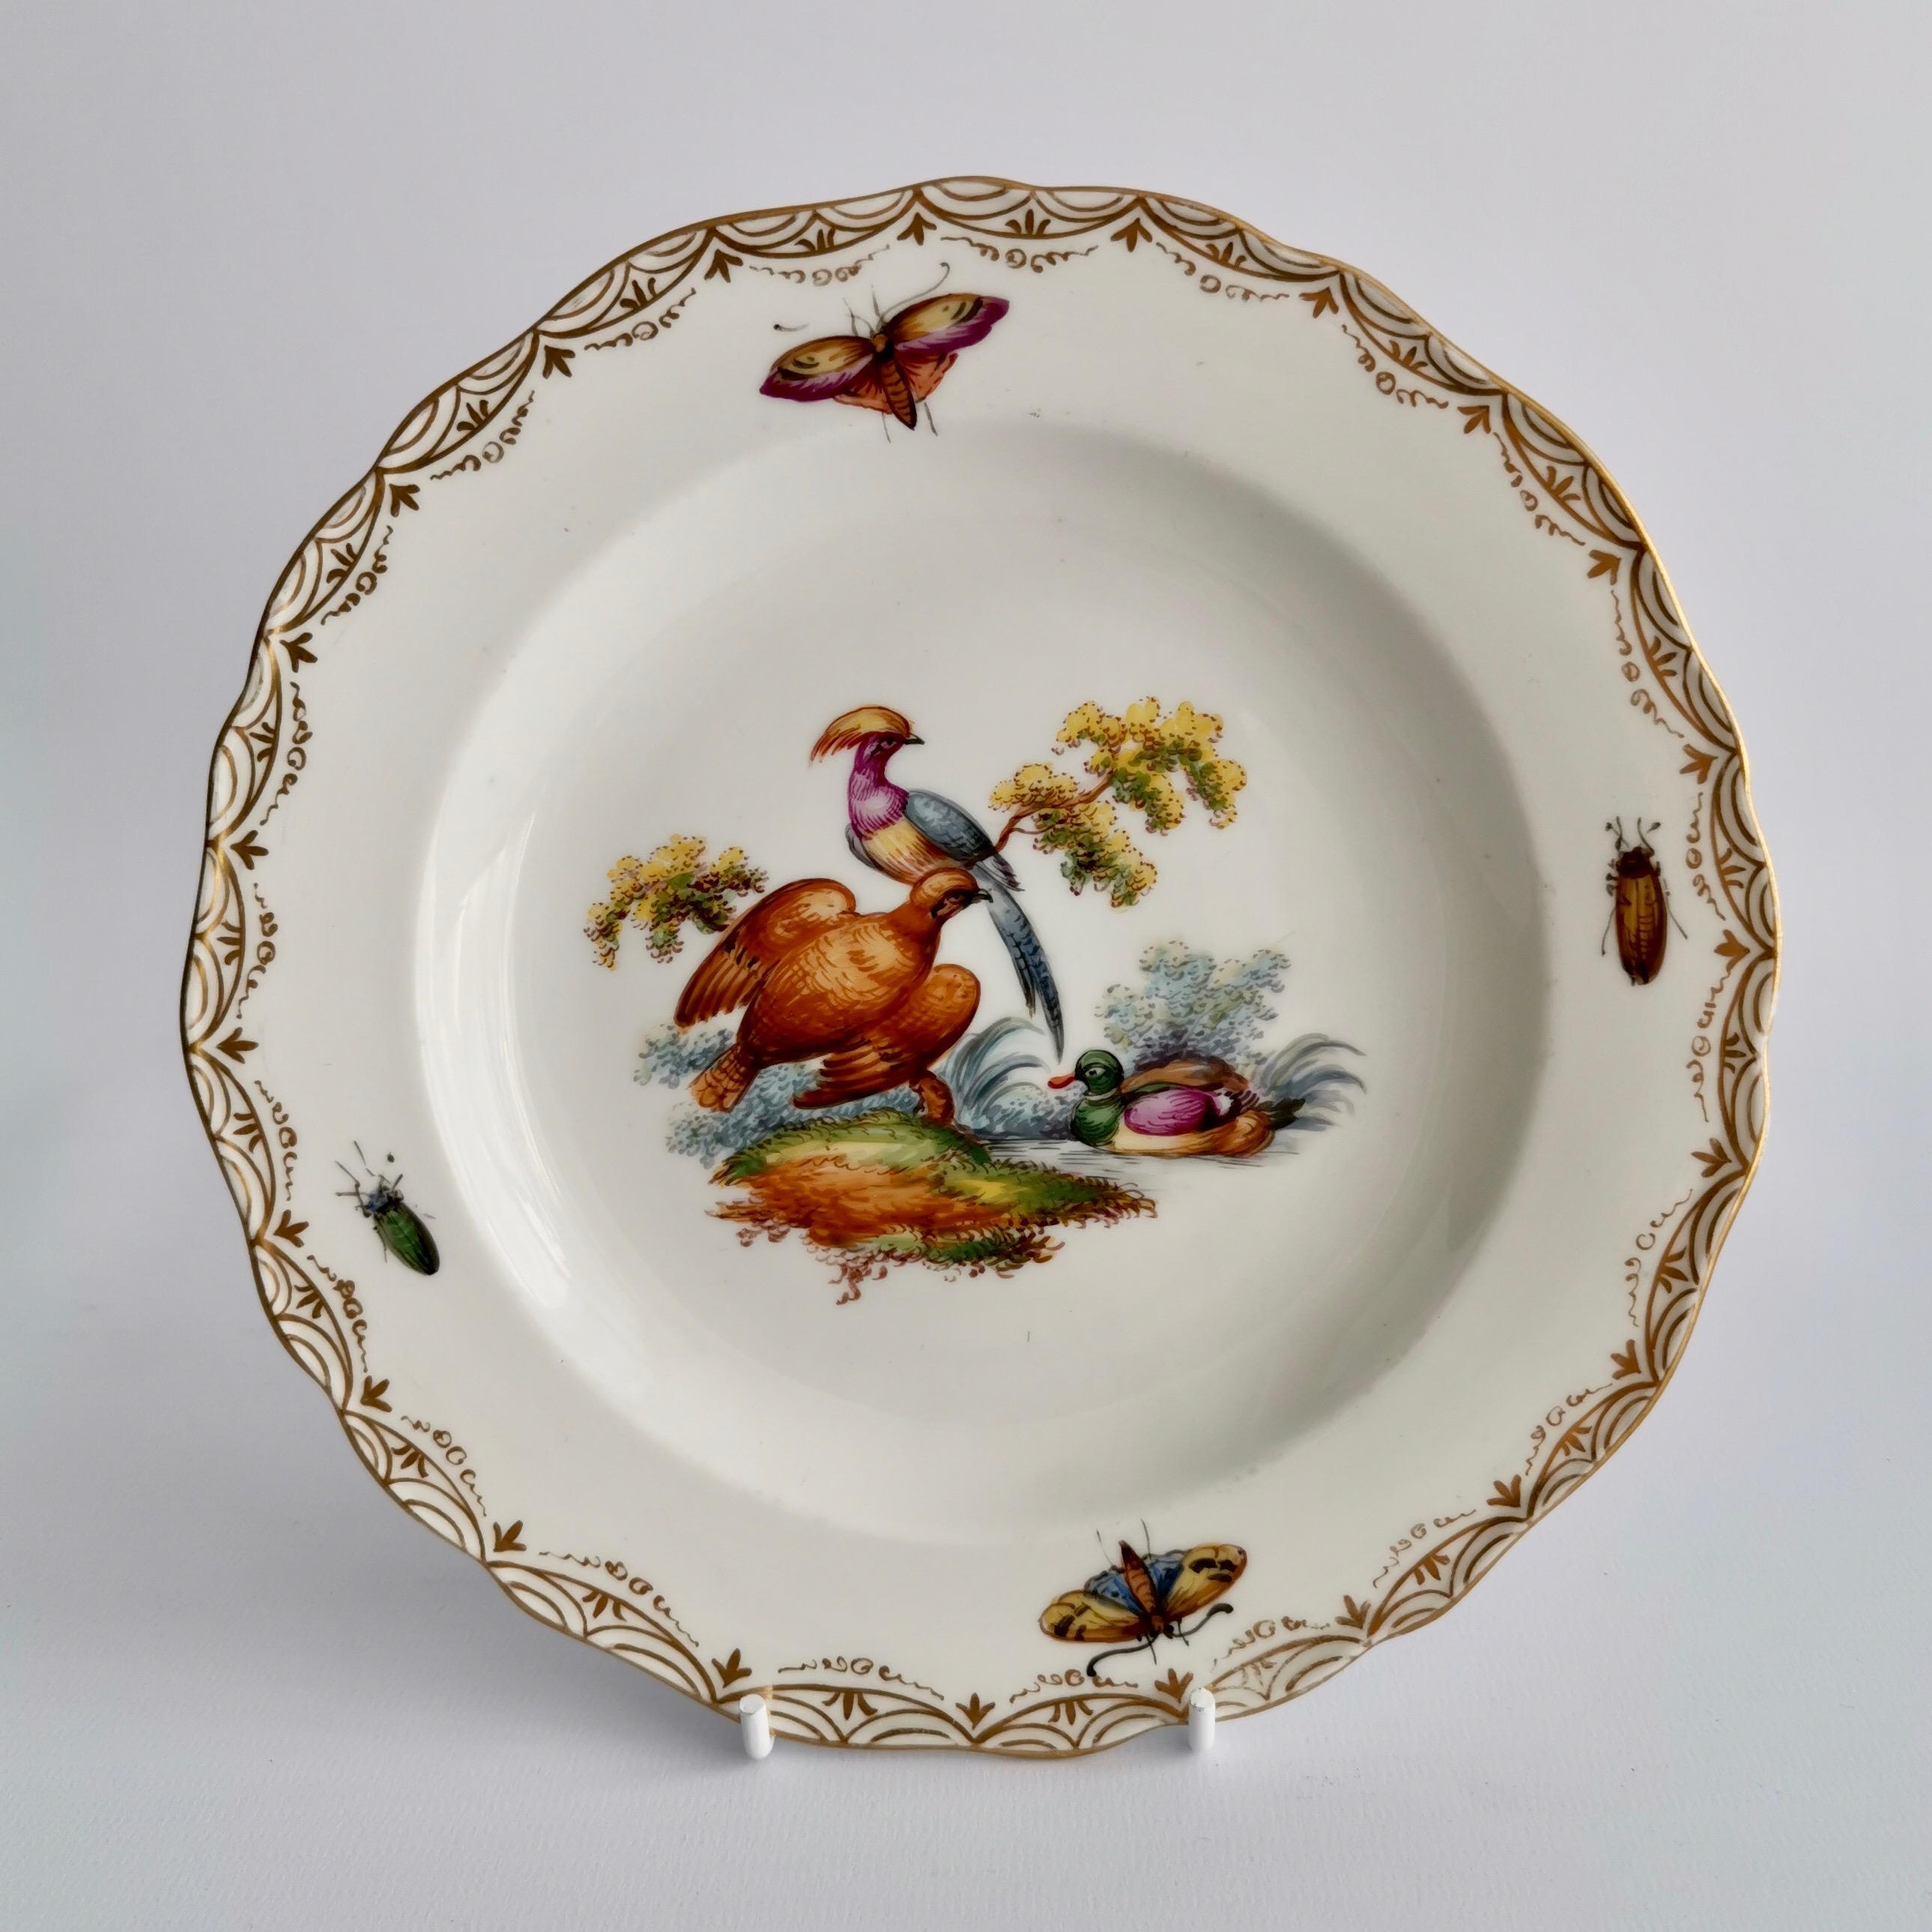 Hand-Painted Set of 6 Meissen Porcelain Dessert Plates, White, Hand Painted Birds, 1852-1870